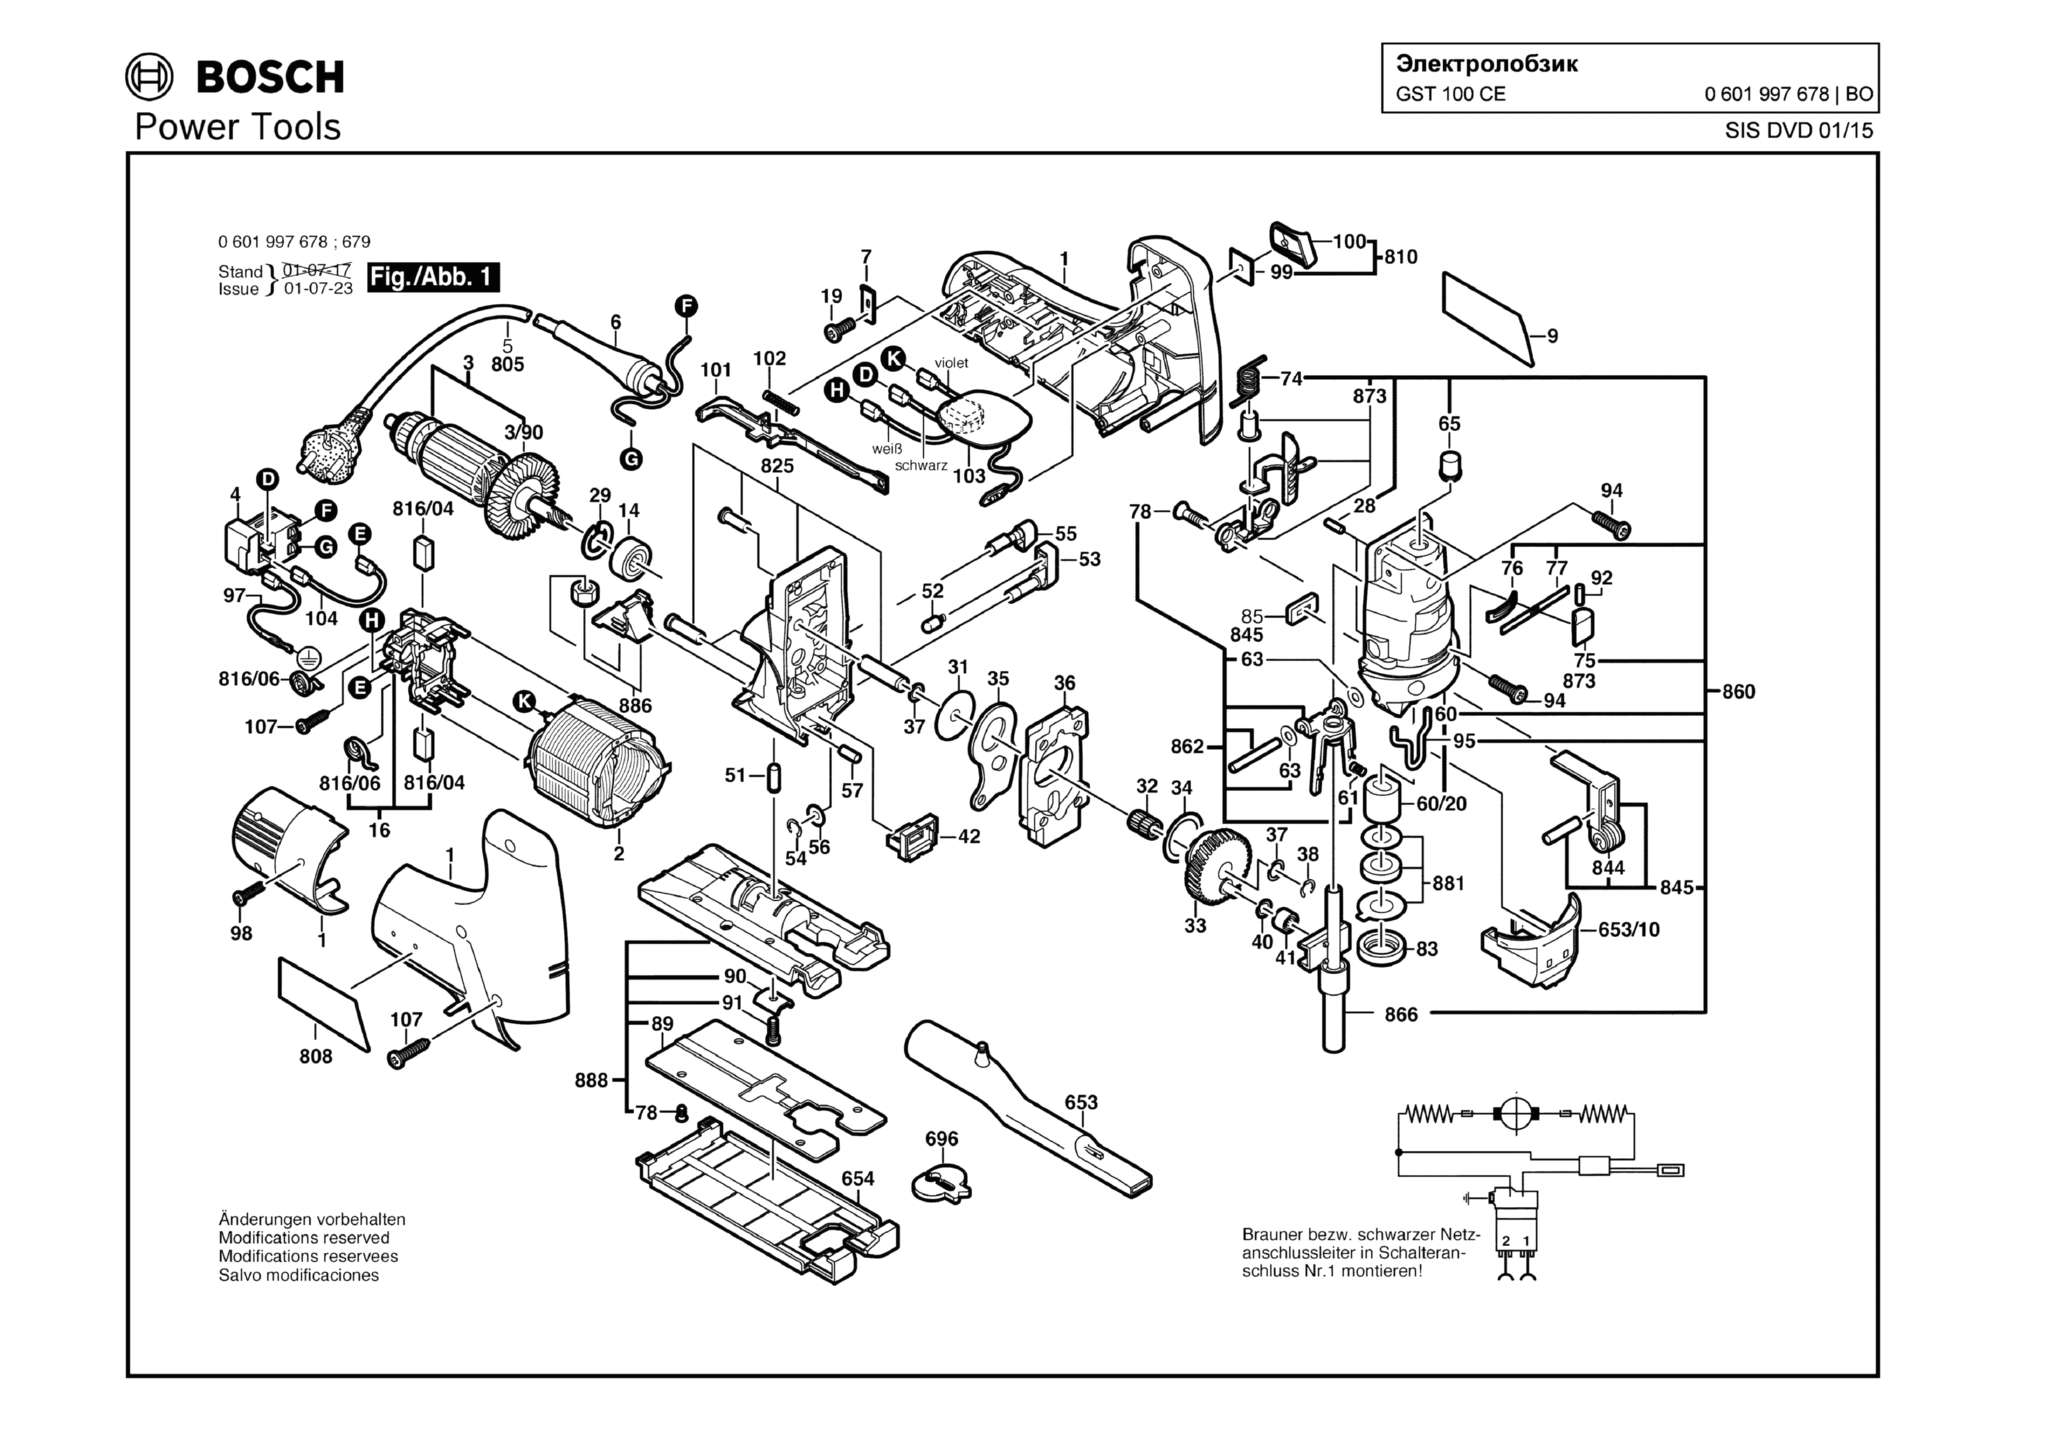 Запчасти, схема и деталировка Bosch GST 100 CE (ТИП 0601997678)